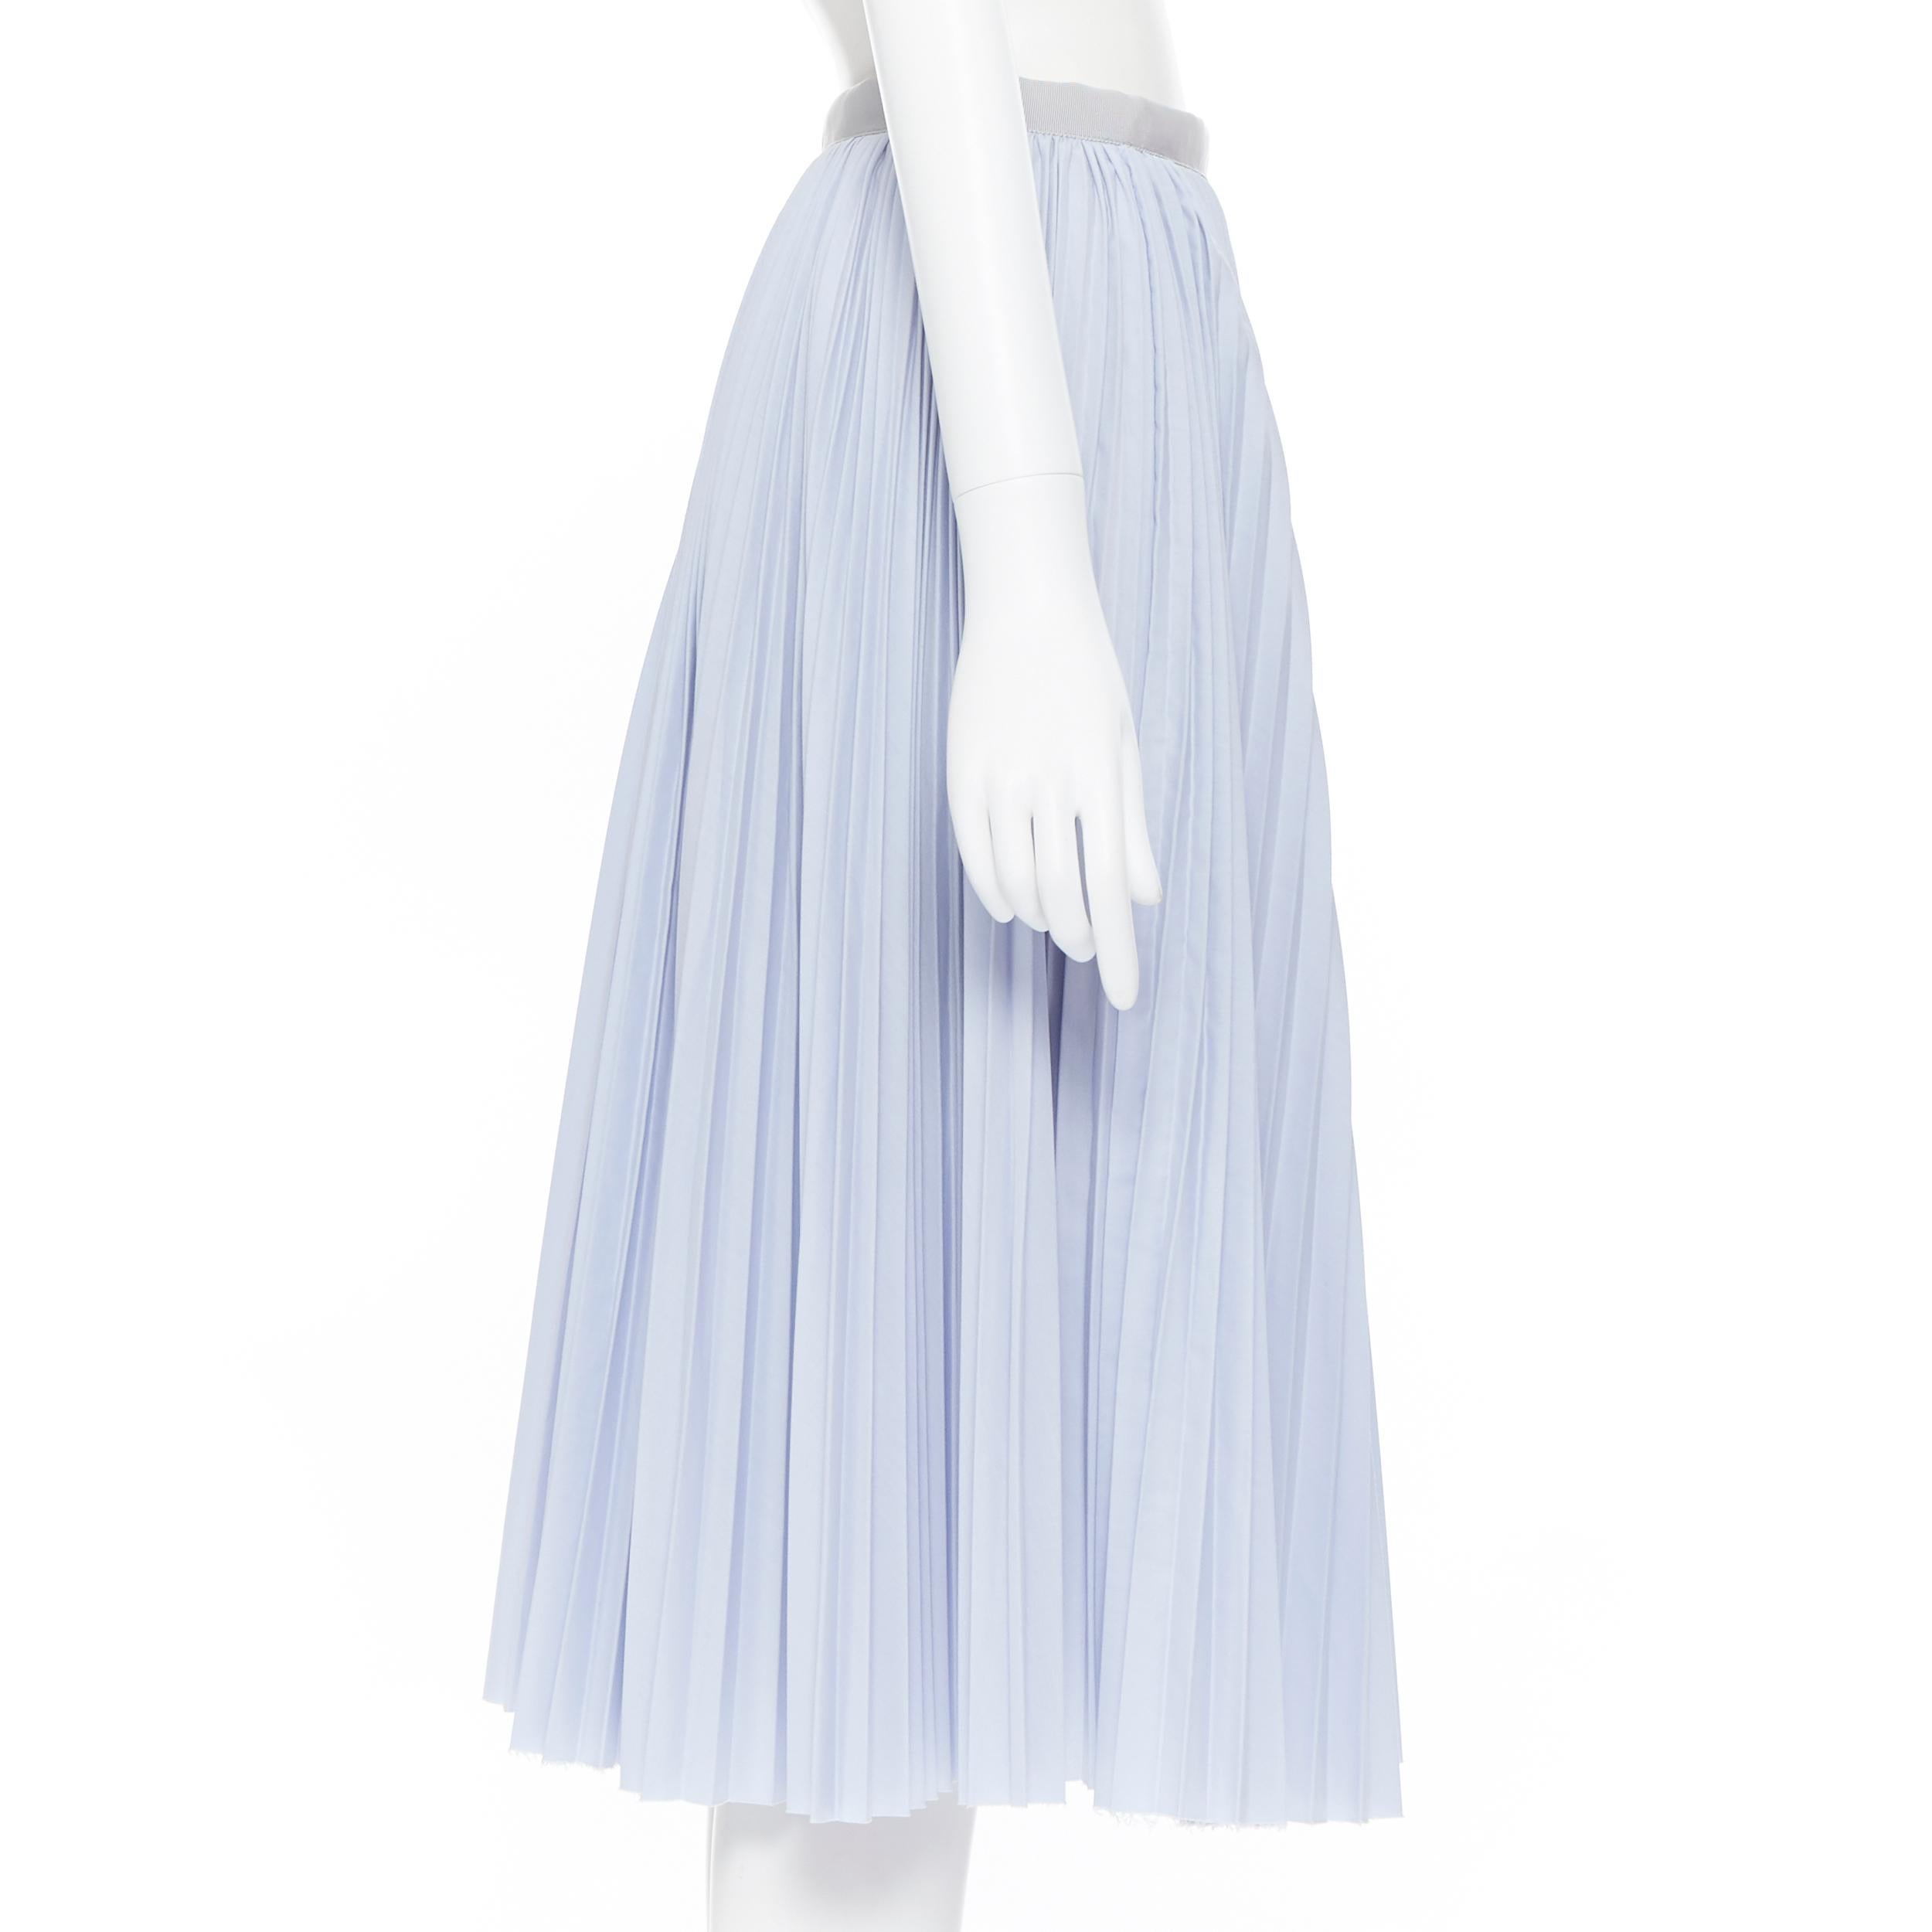 Women's SACAI LUCK grey lace trim skirt blue cotton pleated high slit knee skirt JP1 24